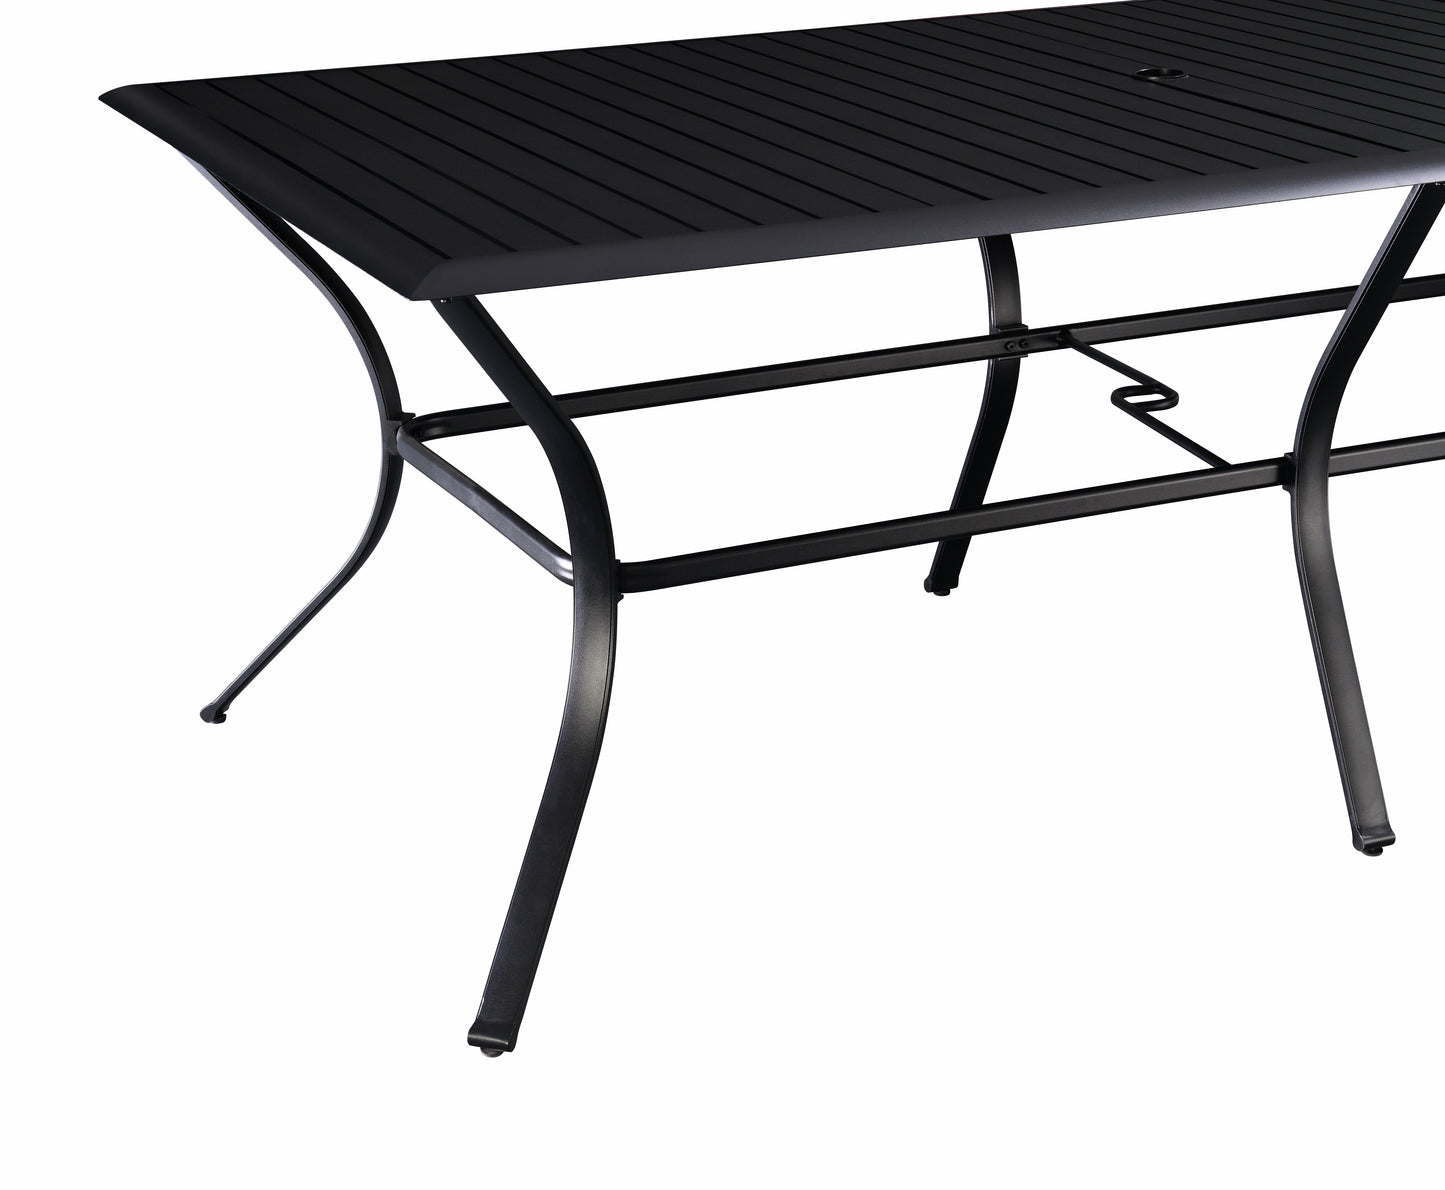 Aluminum Slat Top Table - Black